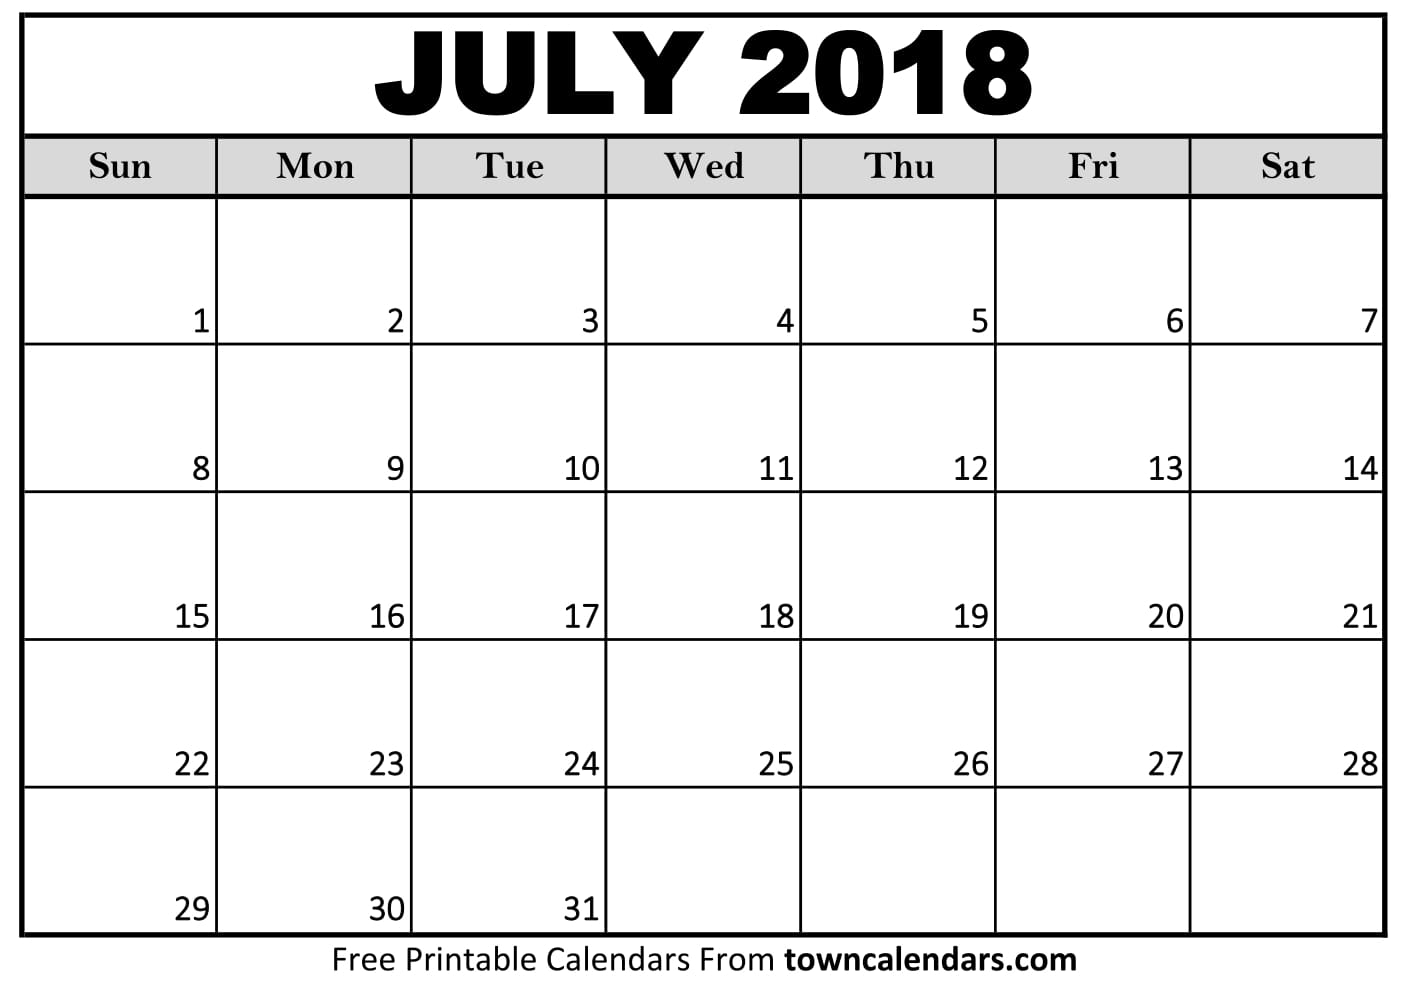 printable-july-2018-calendar-towncalendars